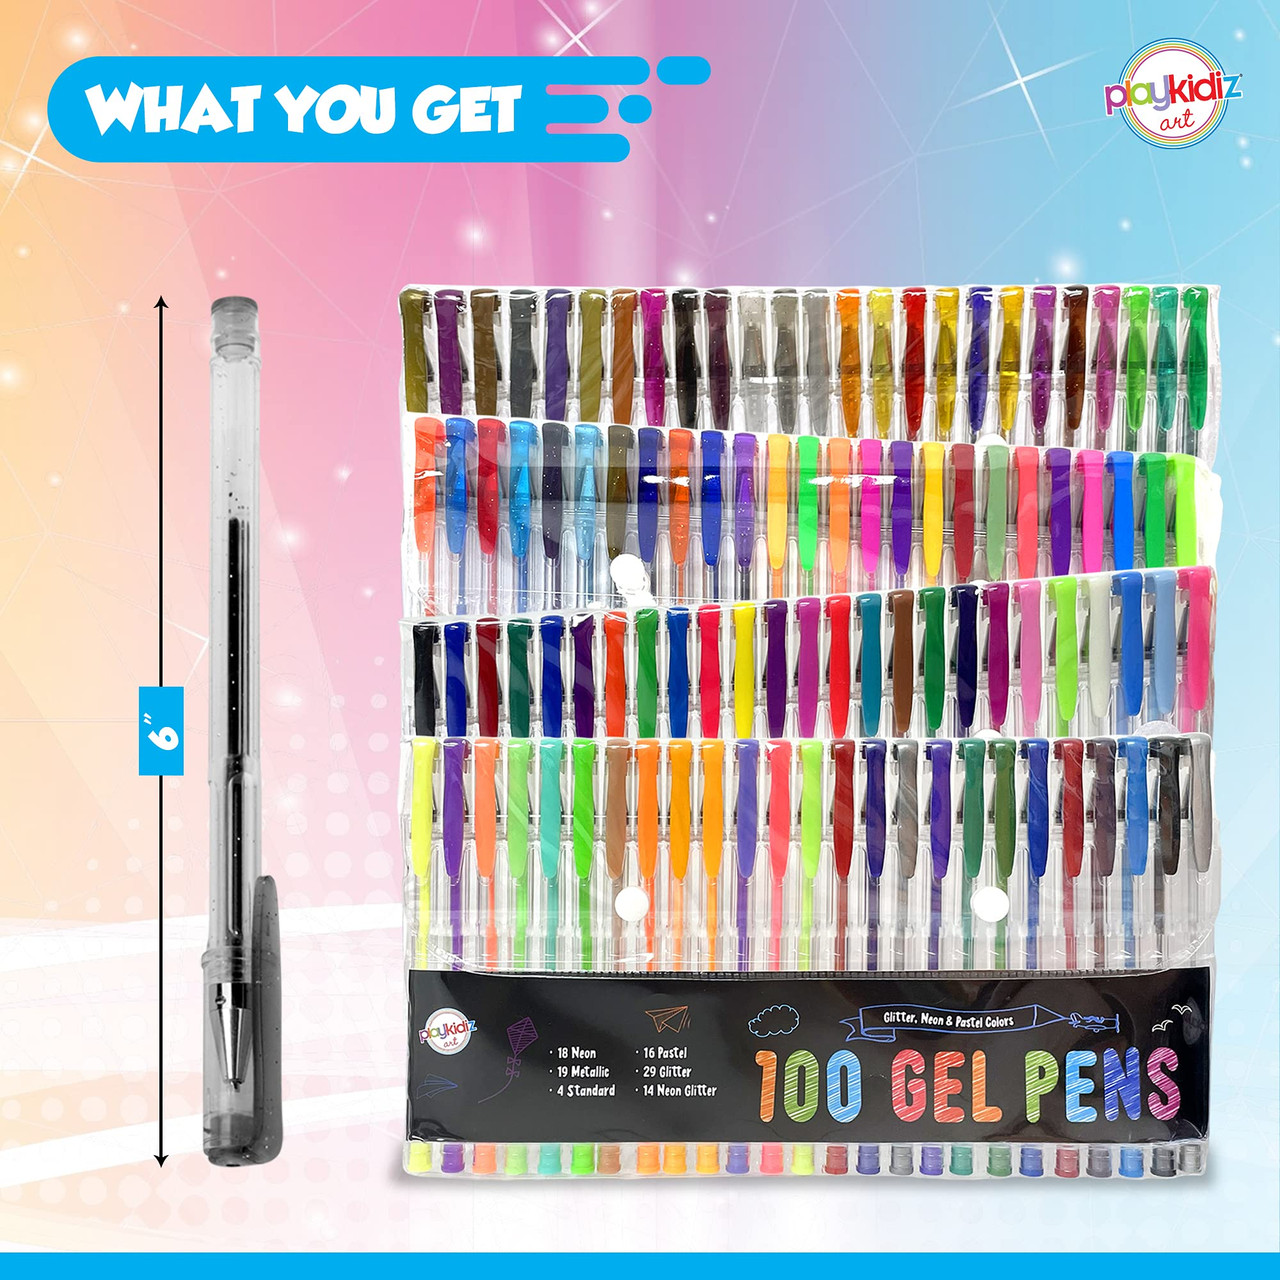 AGENDIT 100 Pack Artist Colored Gel Pen with Rotating Base, Bonus